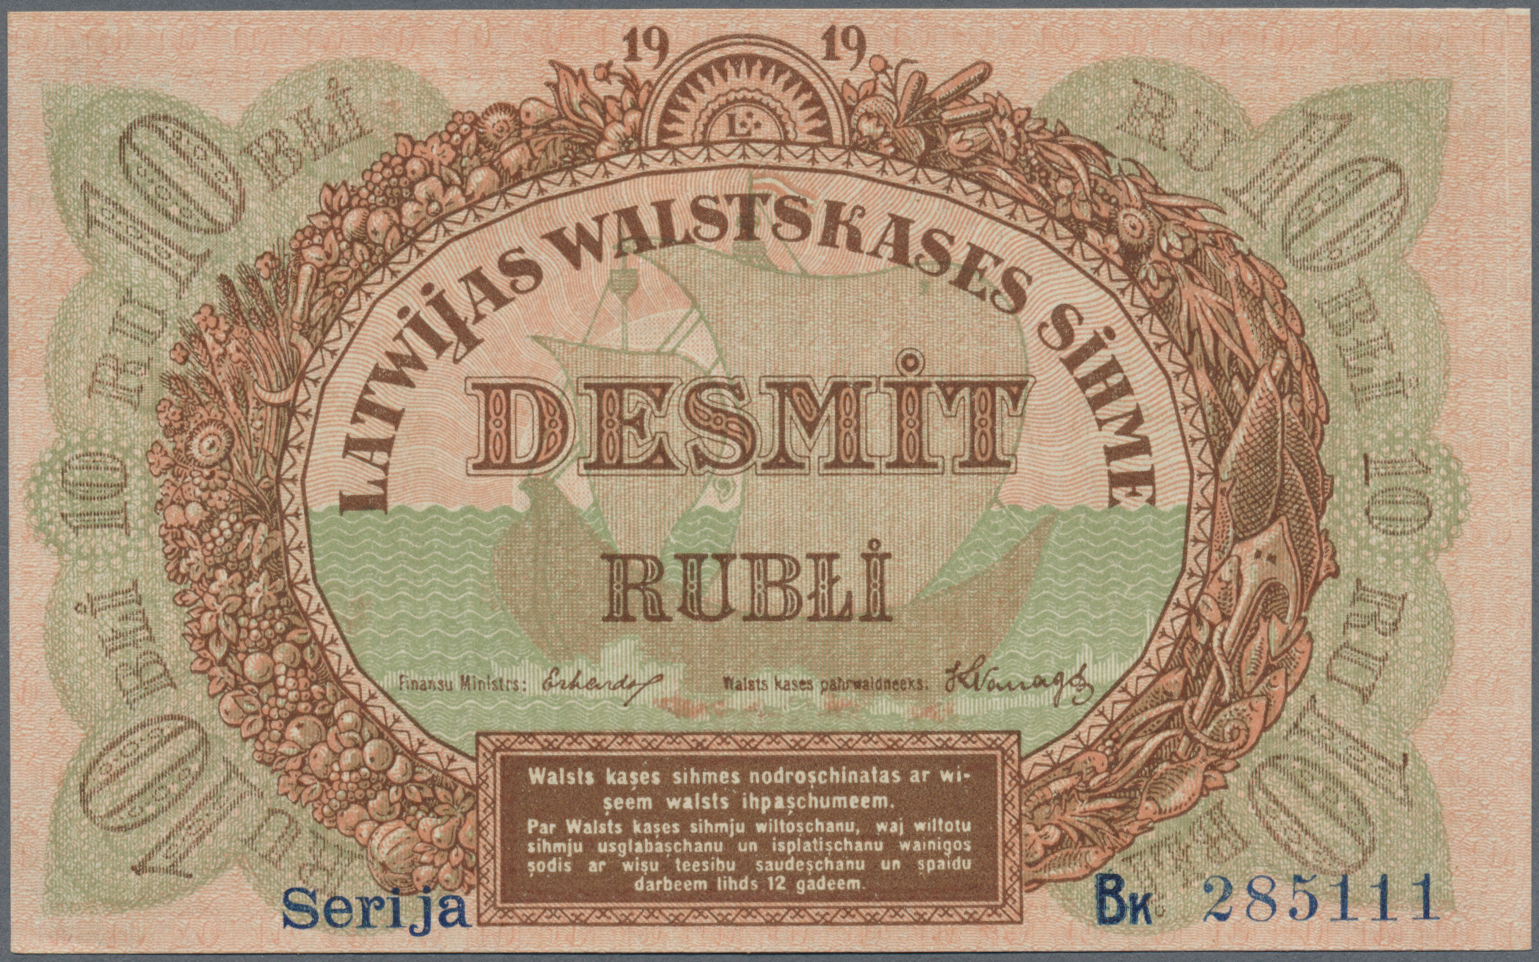 01397 Latvia / Lettland: 10 Rubli 1919 P. 4b, Series "Bk", Sign. Erhards, Very Light Center Fold, No Holes Or Tears, Cri - Latvia